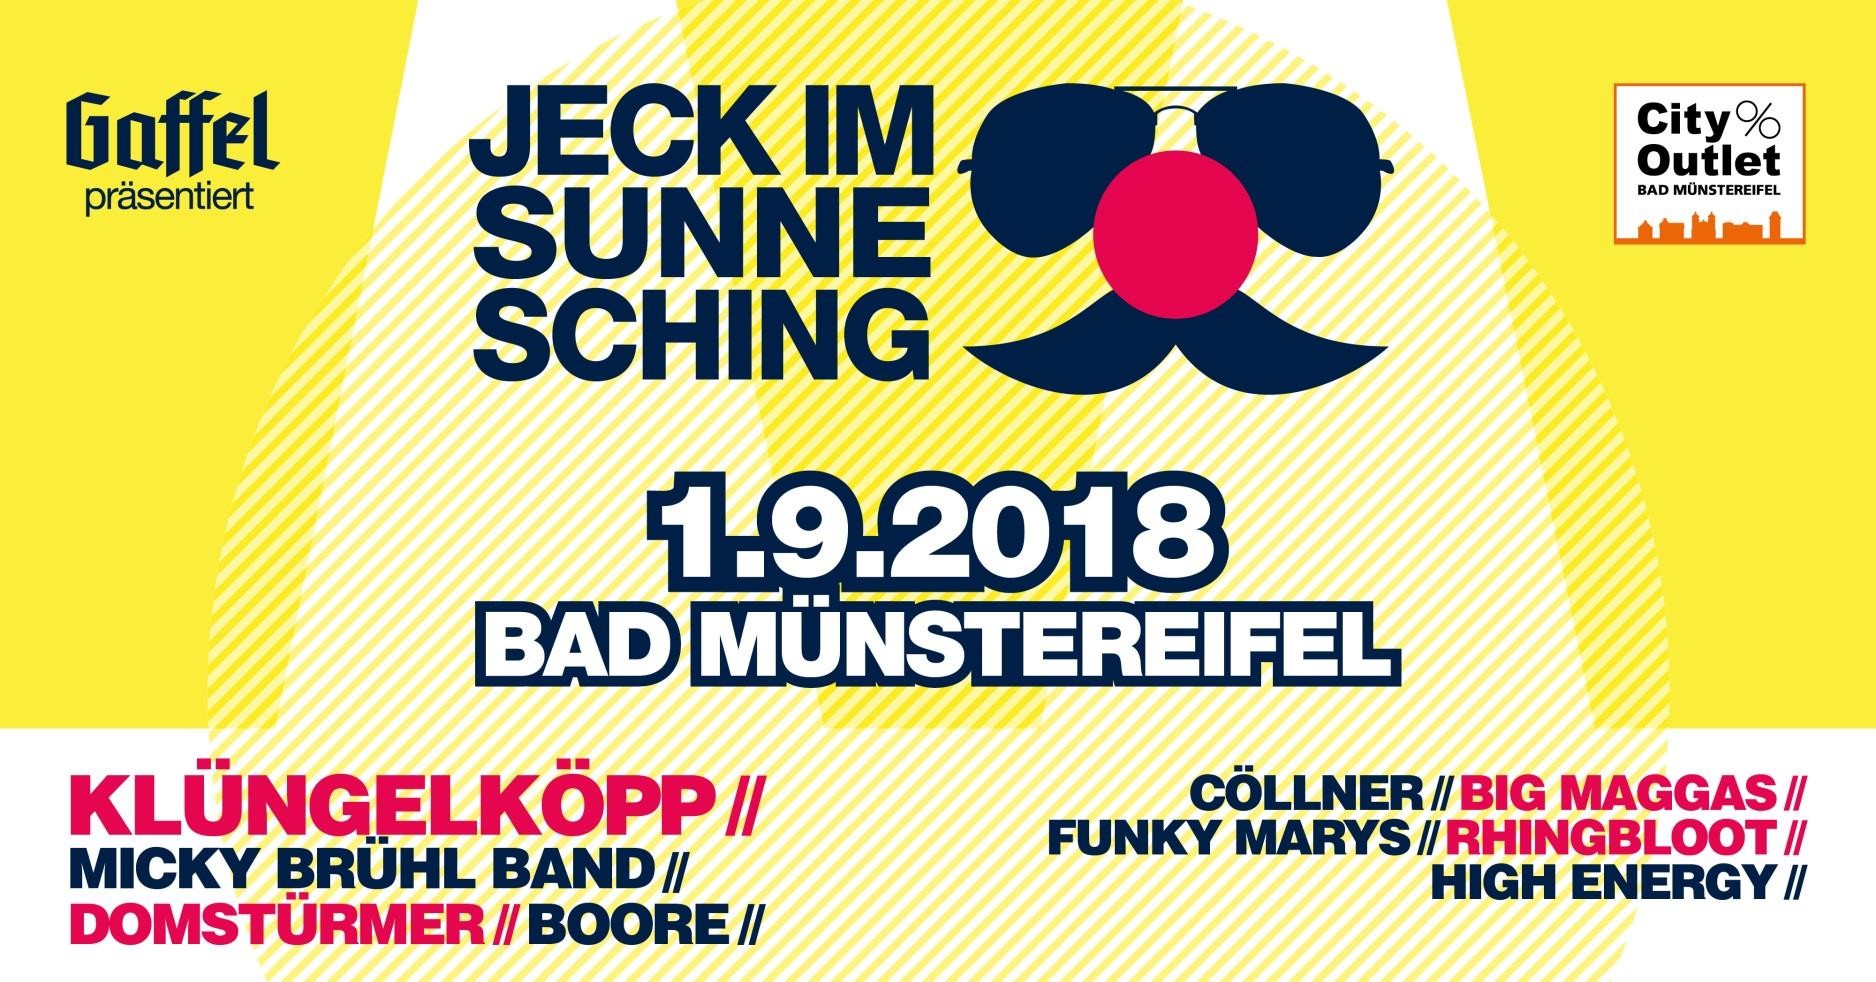 JECK IM SUNNESCHING Bad Münstereifel - City Outlet Bad MÜnstereifel